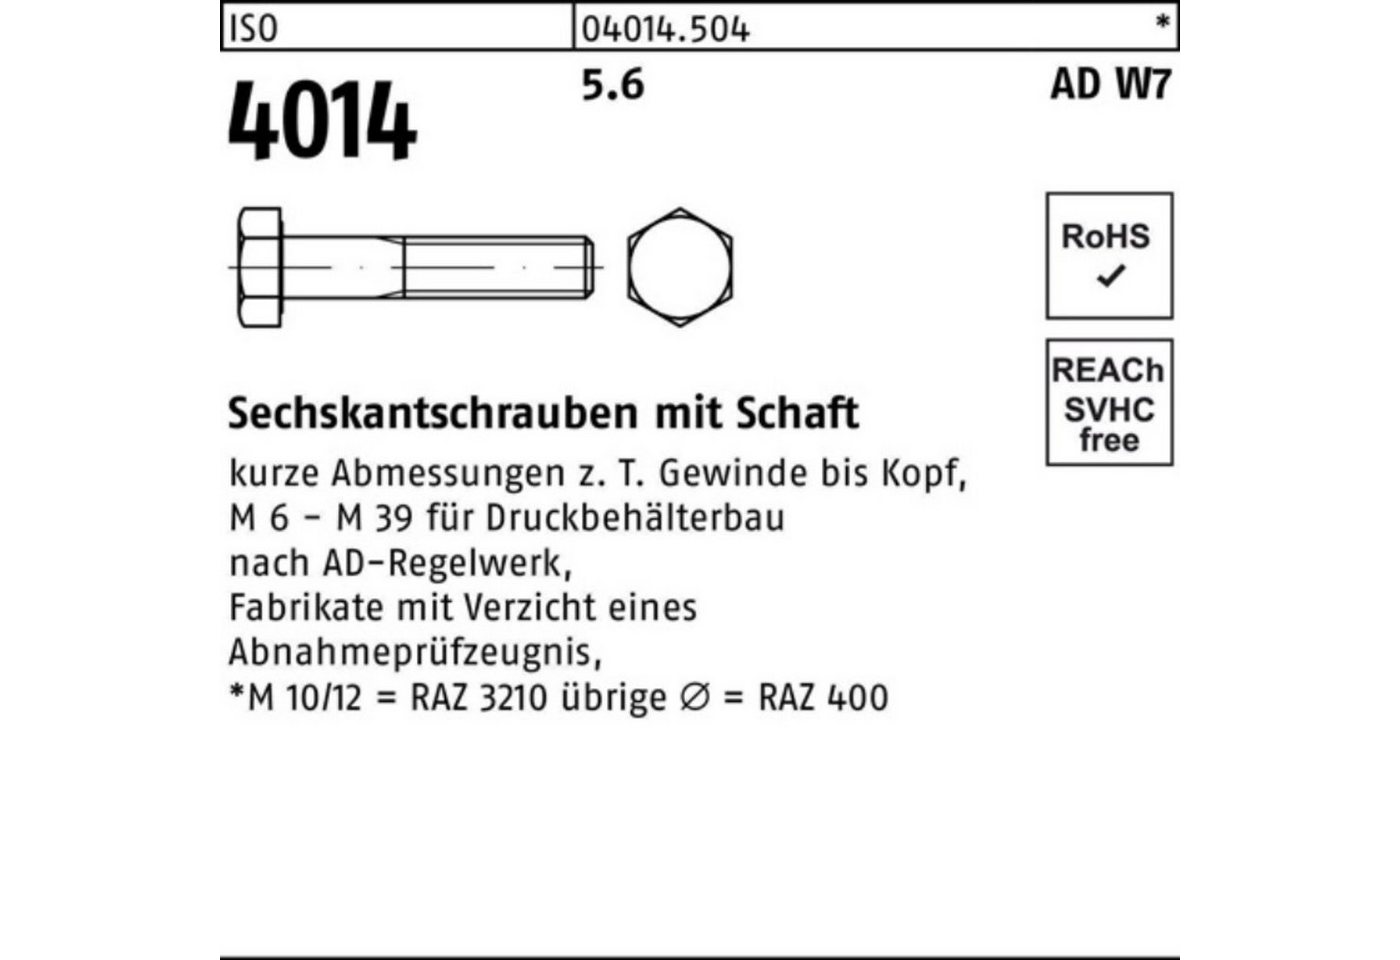 Bufab Sechskantschraube 200er Pack Sechskantschraube ISO 4014 Schaft M6x 50 5.6 W7 200 Stück von Bufab